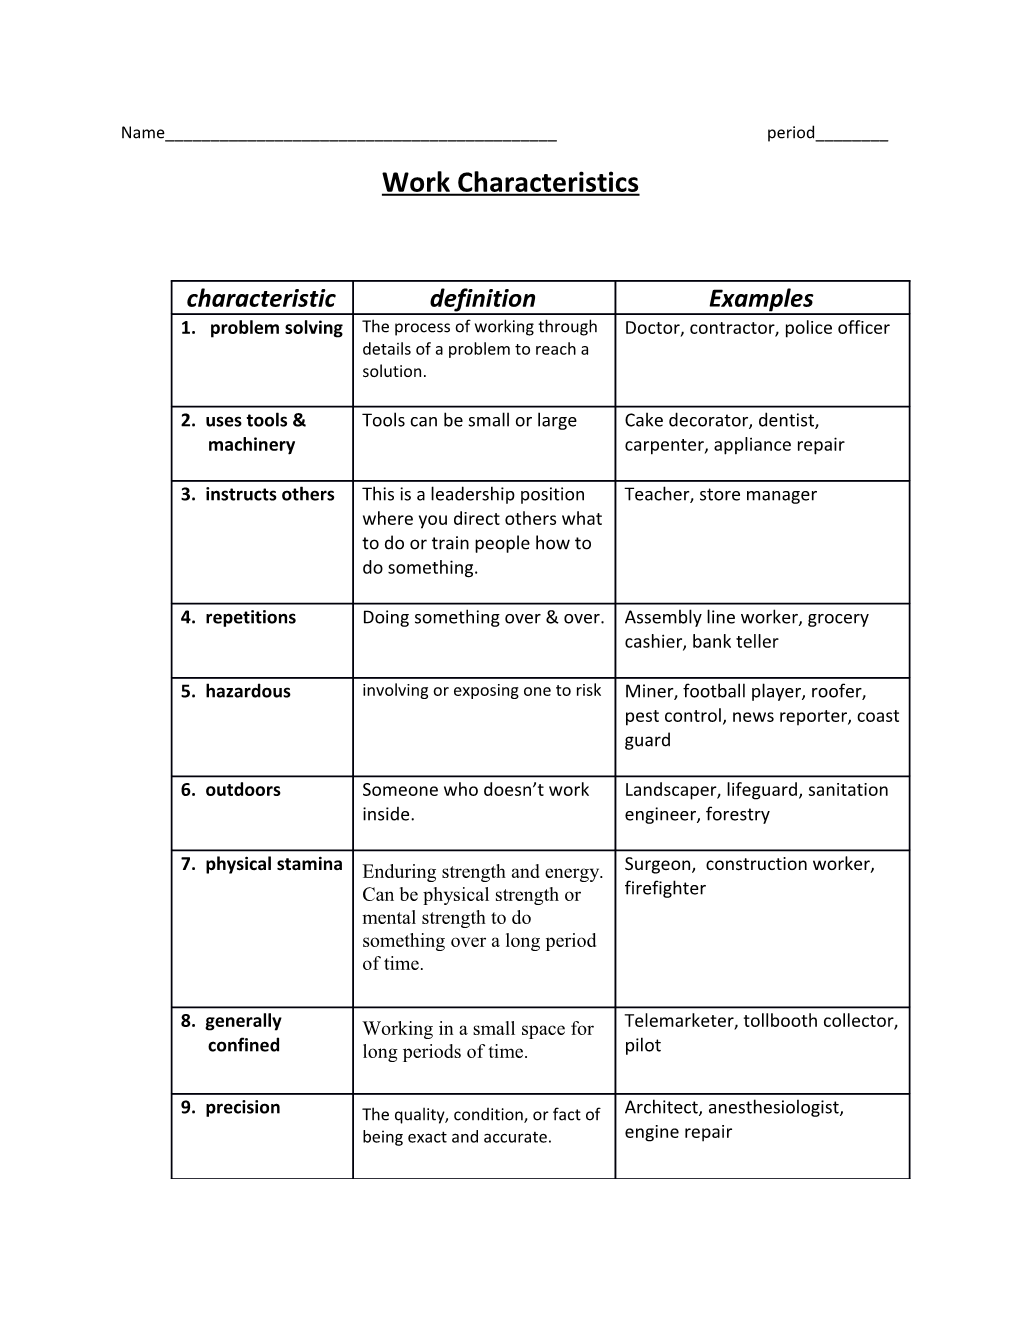 Work Characteristics